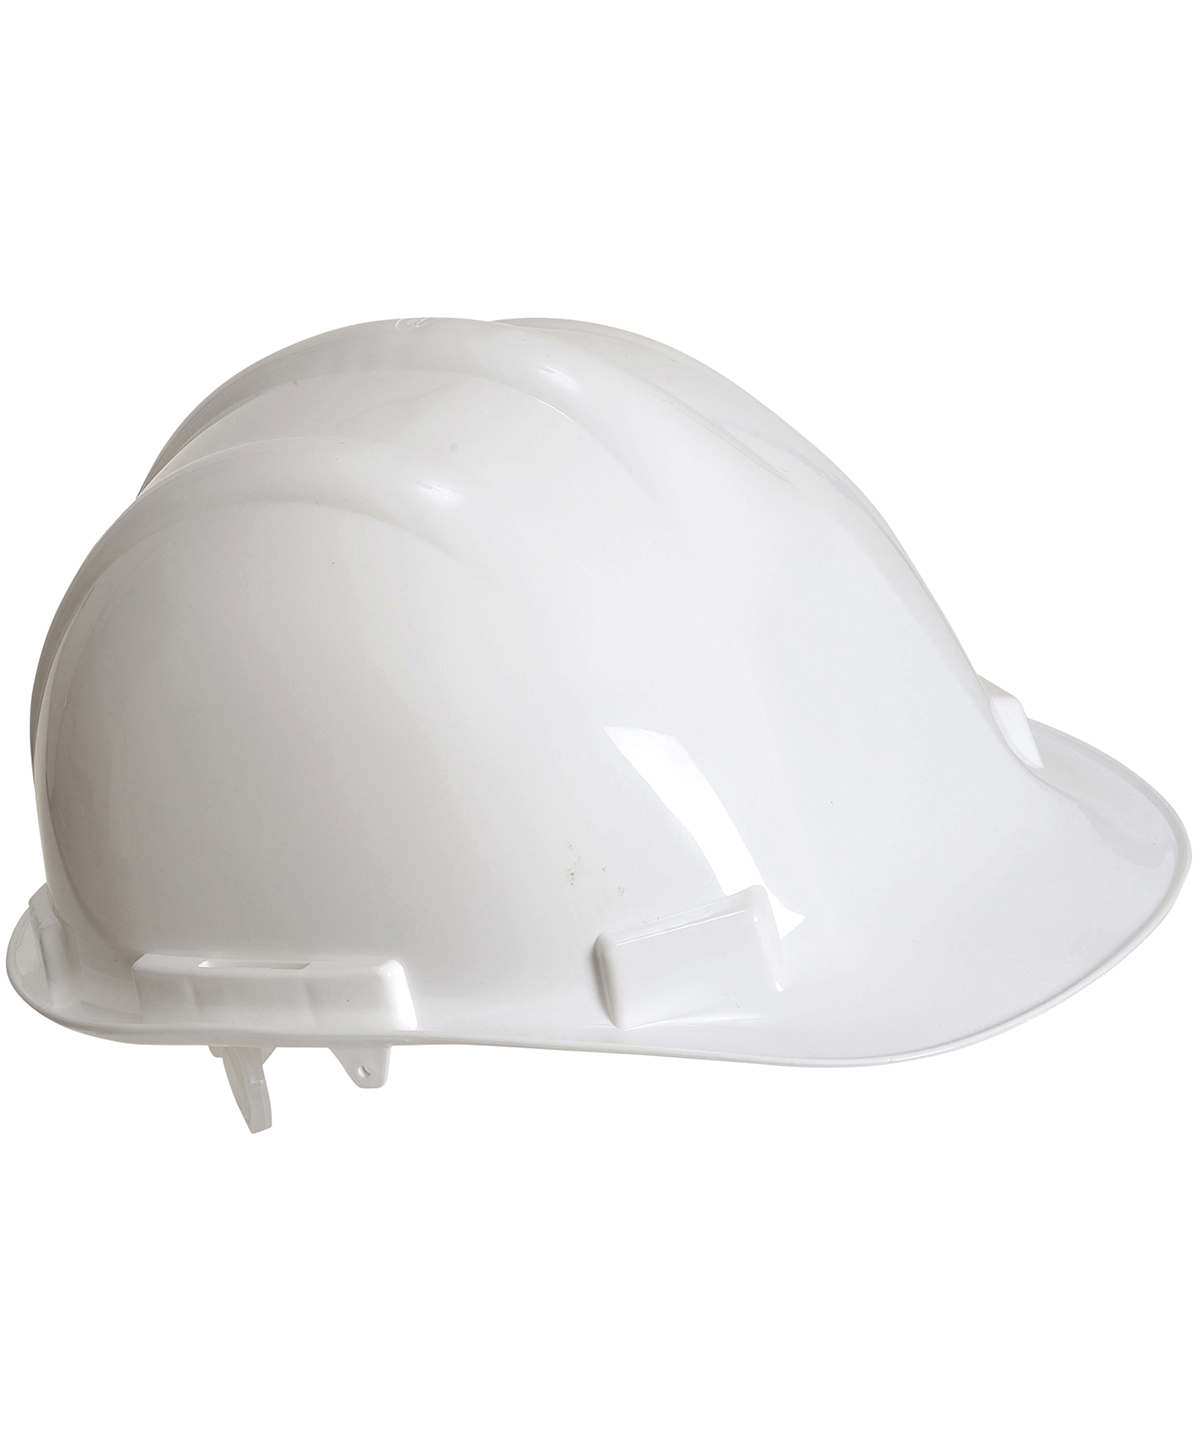 Expertbase Safety Helmet (Pw50) White Size One Size